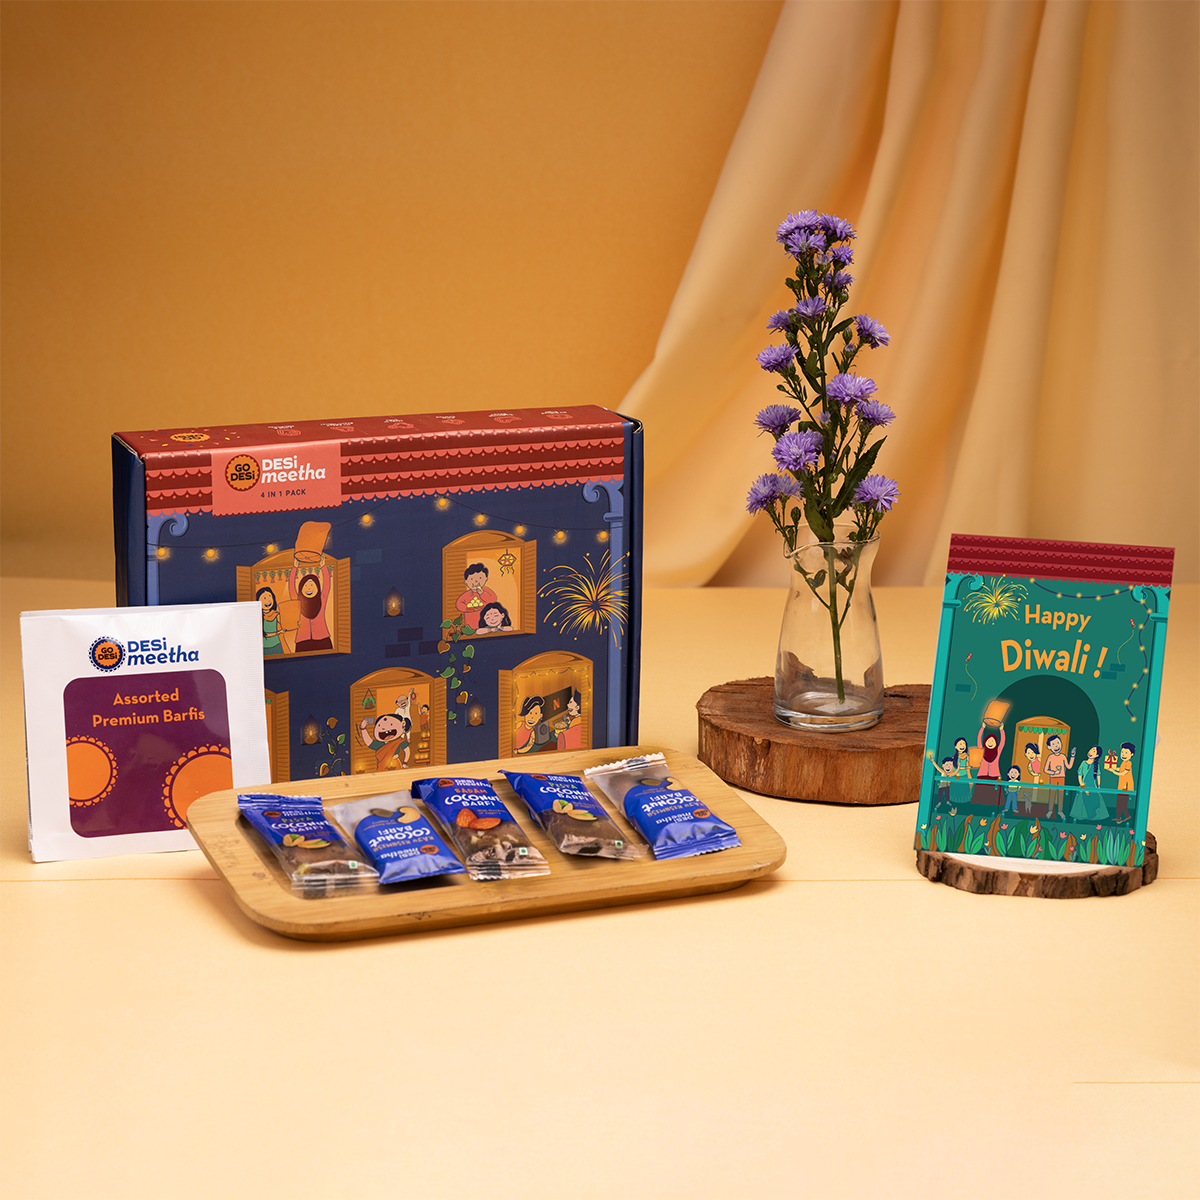 DC-GO DESi Festive Meetha Gift Box -  4 in 1| DESi Gifts | Sweets Gift | DESi Meetha